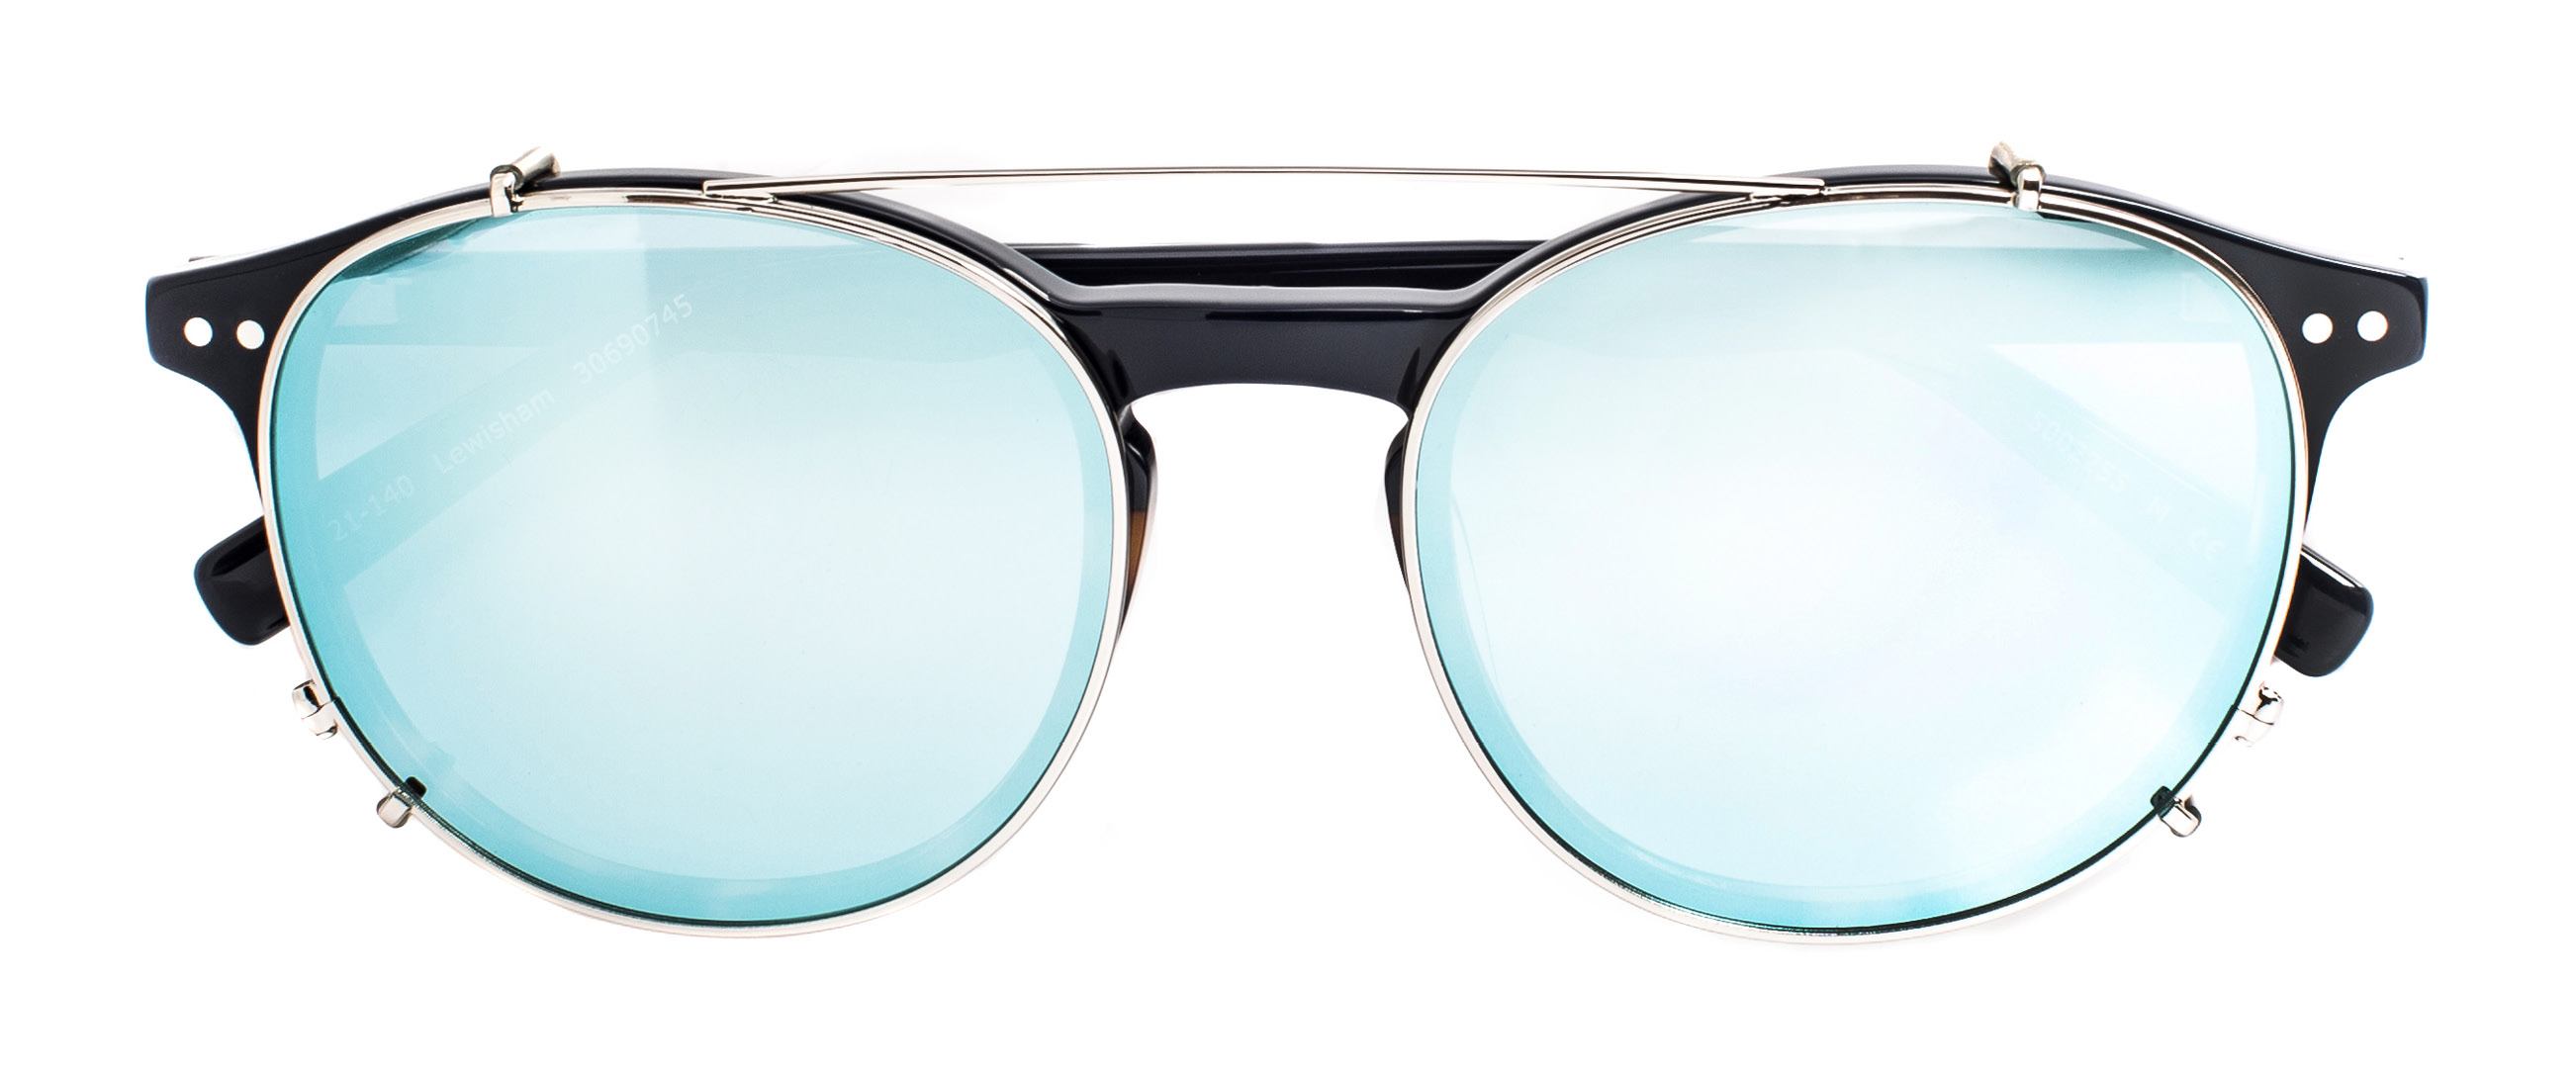 Sunglasses Carrera 5256 Clip Vintage Panto Frame Clip On